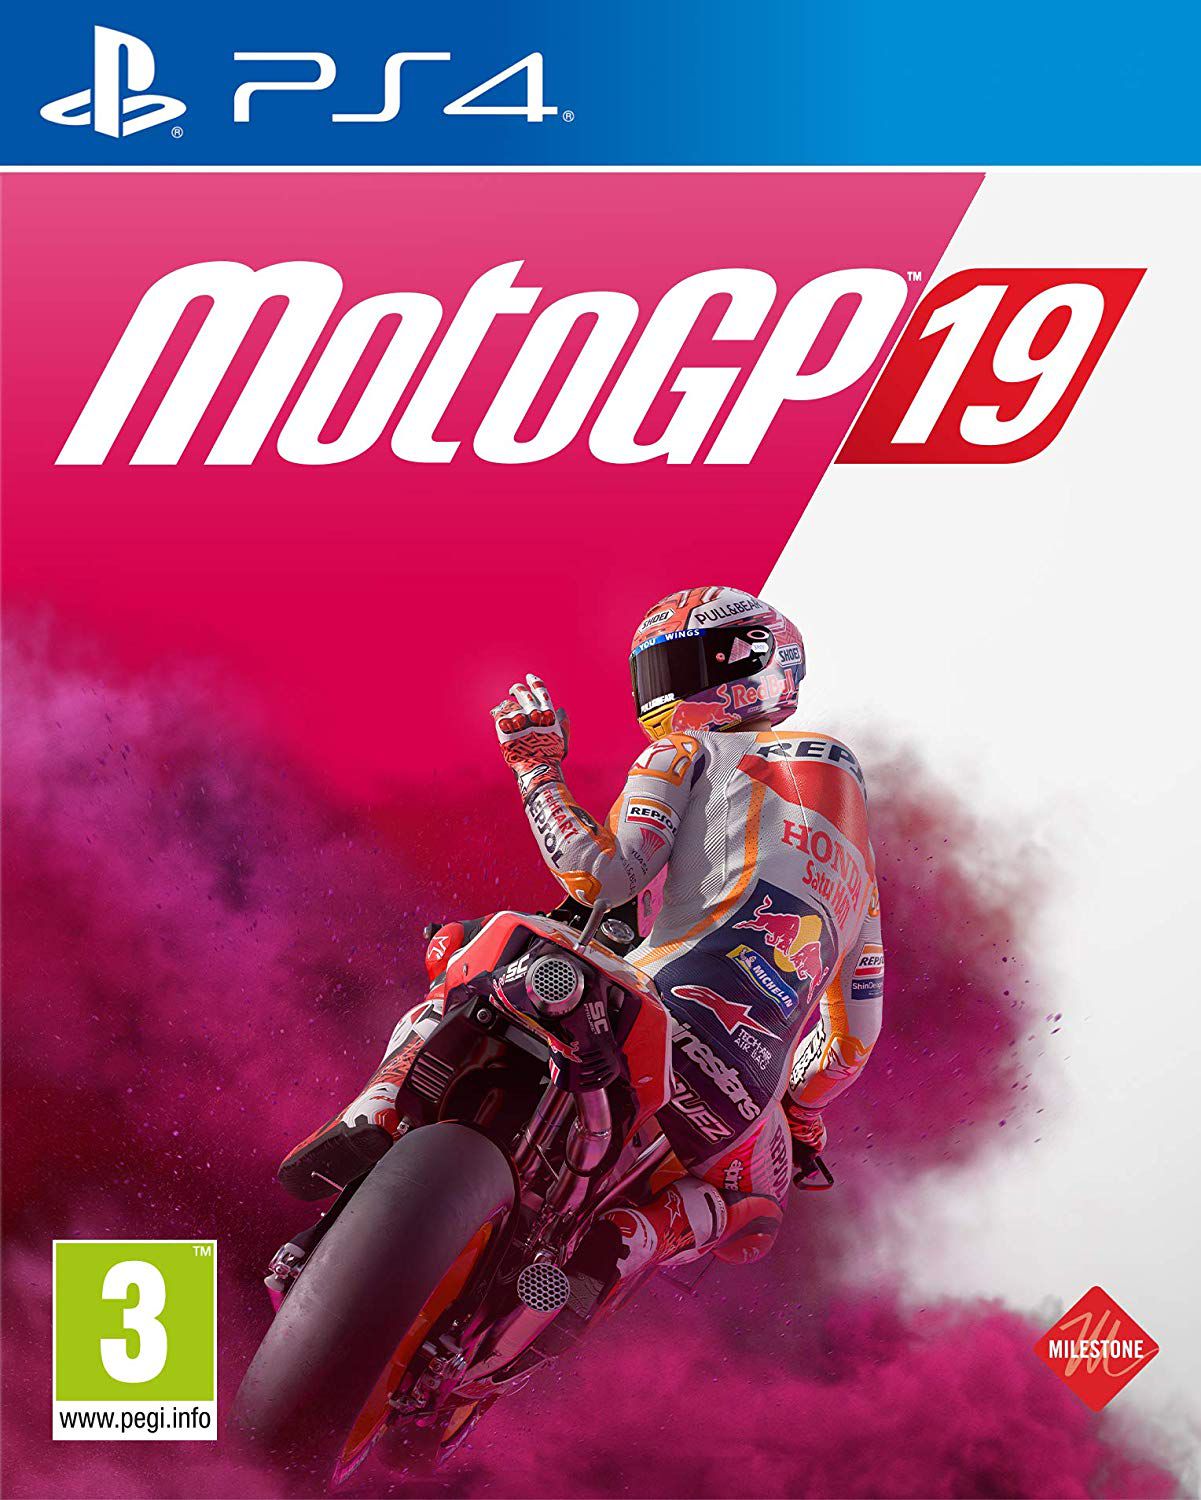 GP Moto Racing 3 no Jogos 360